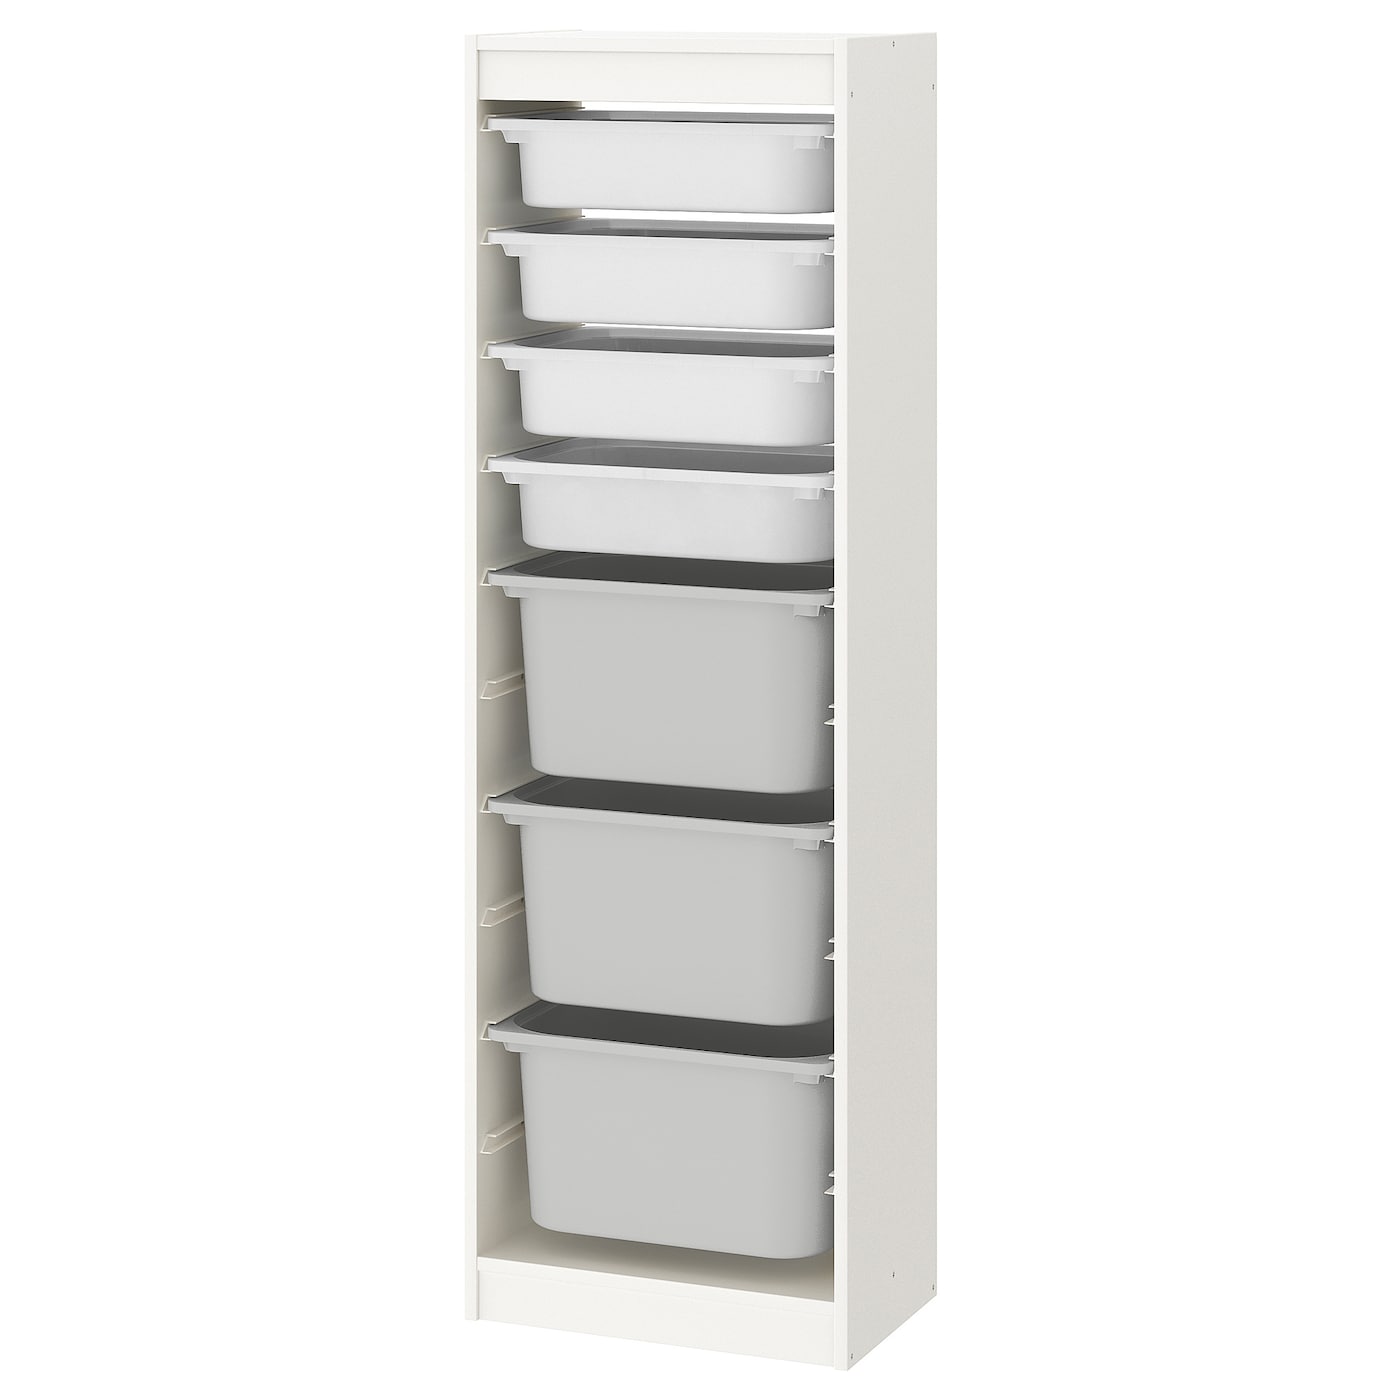 Стеллаж - IKEA TROFAST, 46х30х145 см, белый/бело-серый, ТРУФАСТ ИКЕА